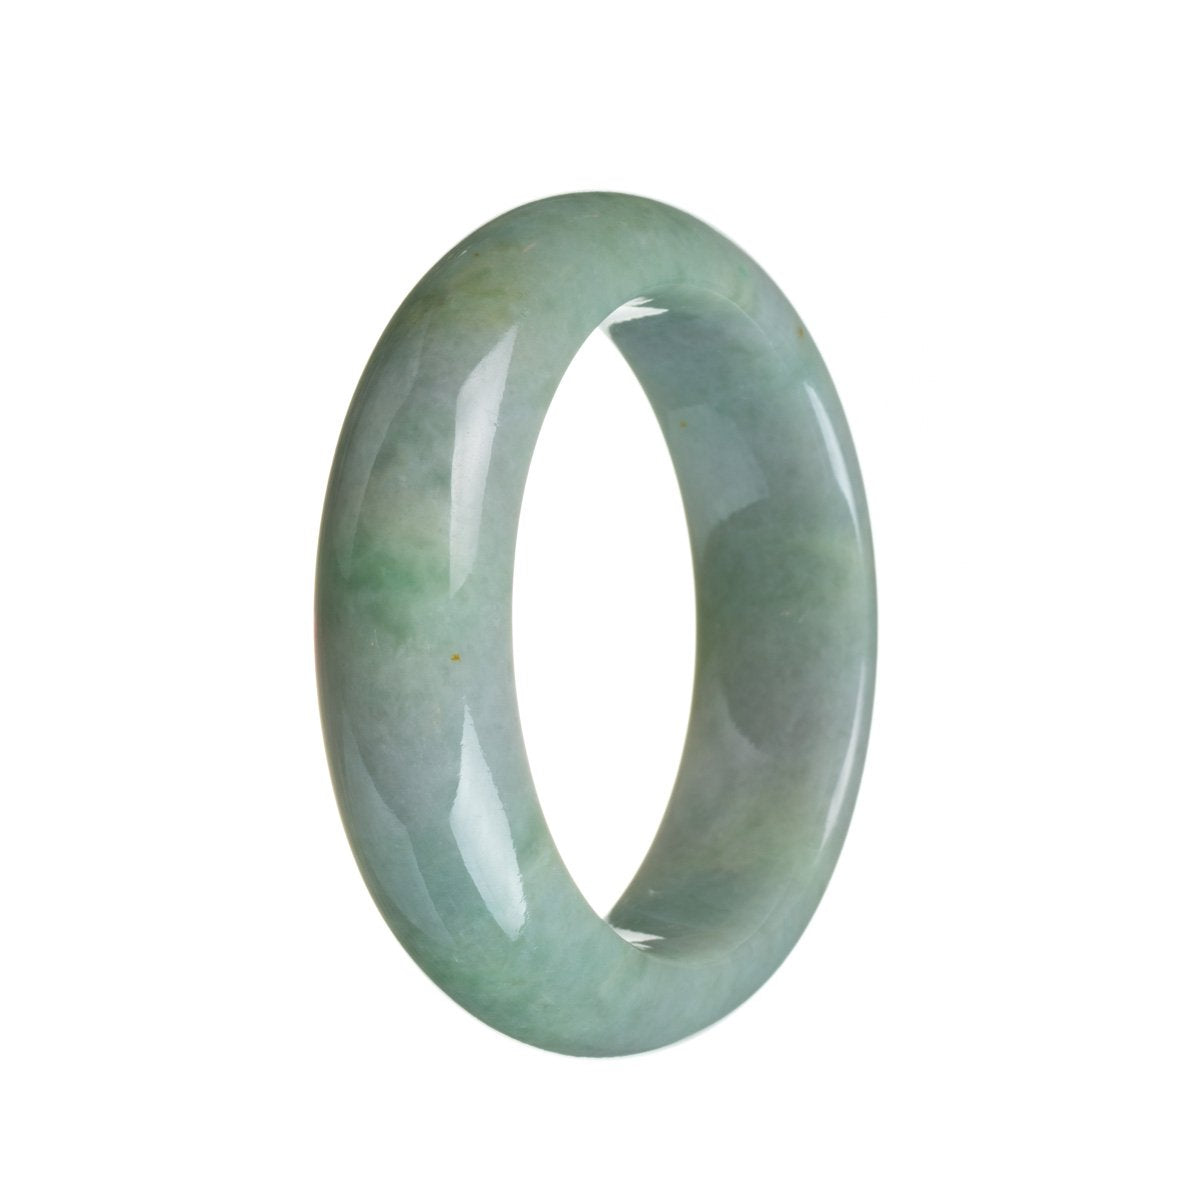 A light green Jade bracelet with a half moon design, measuring 53mm.